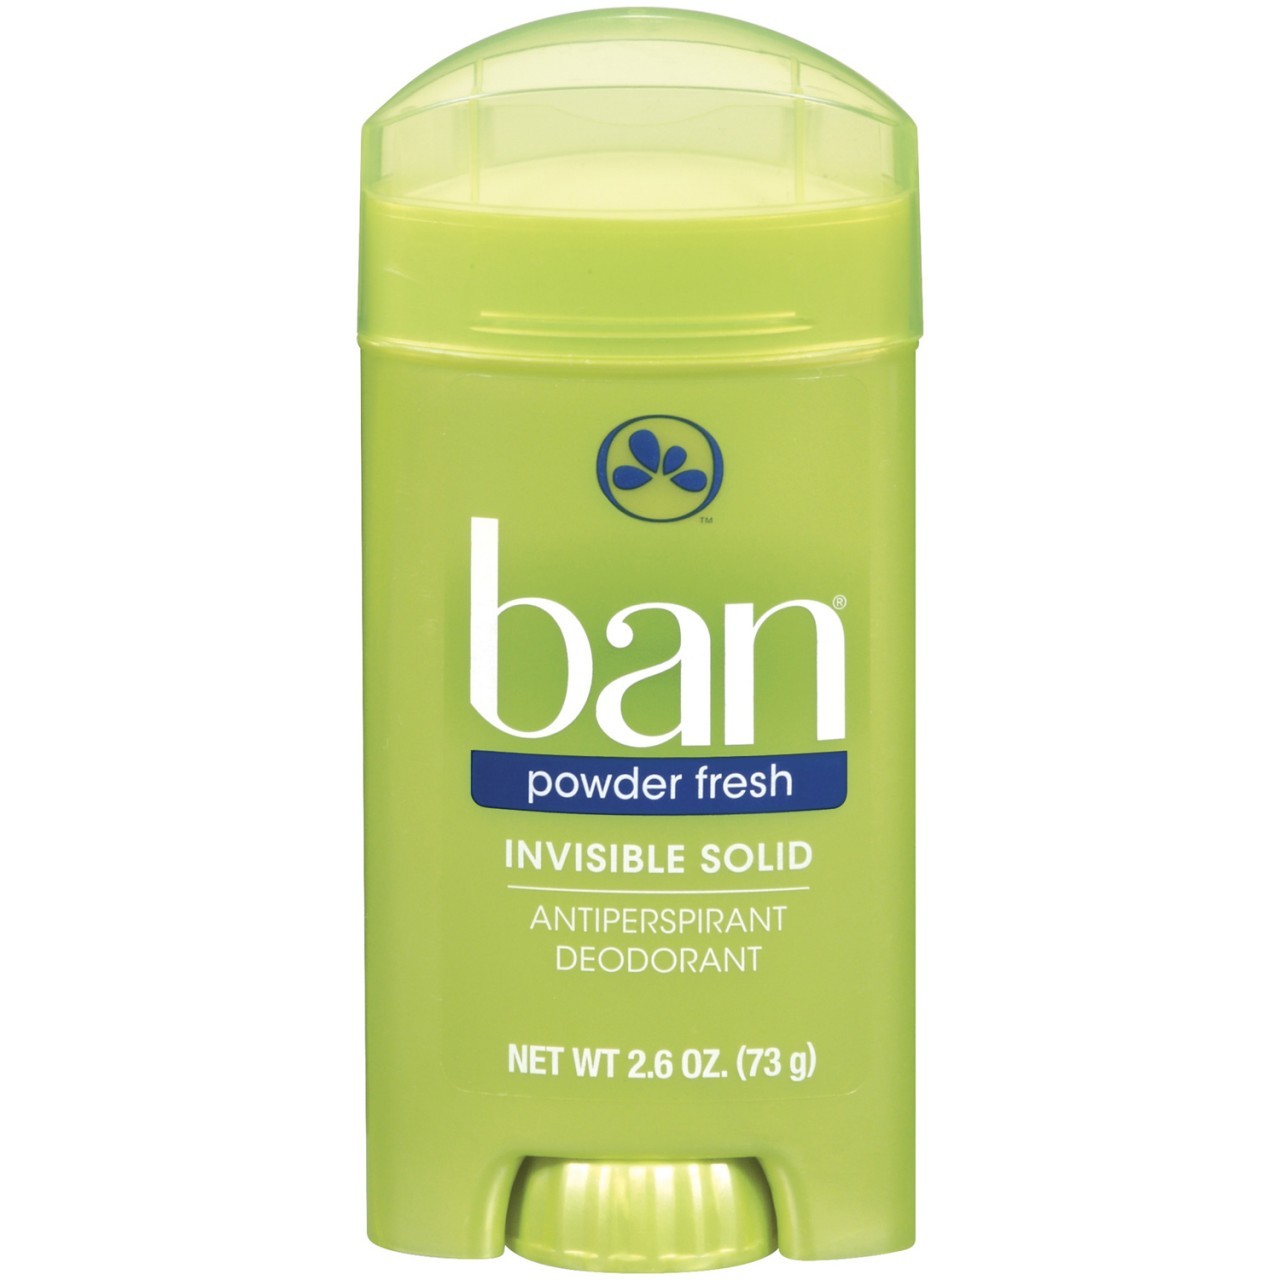 Ban Invisible Solid Deodorant Powder Free, 2oz